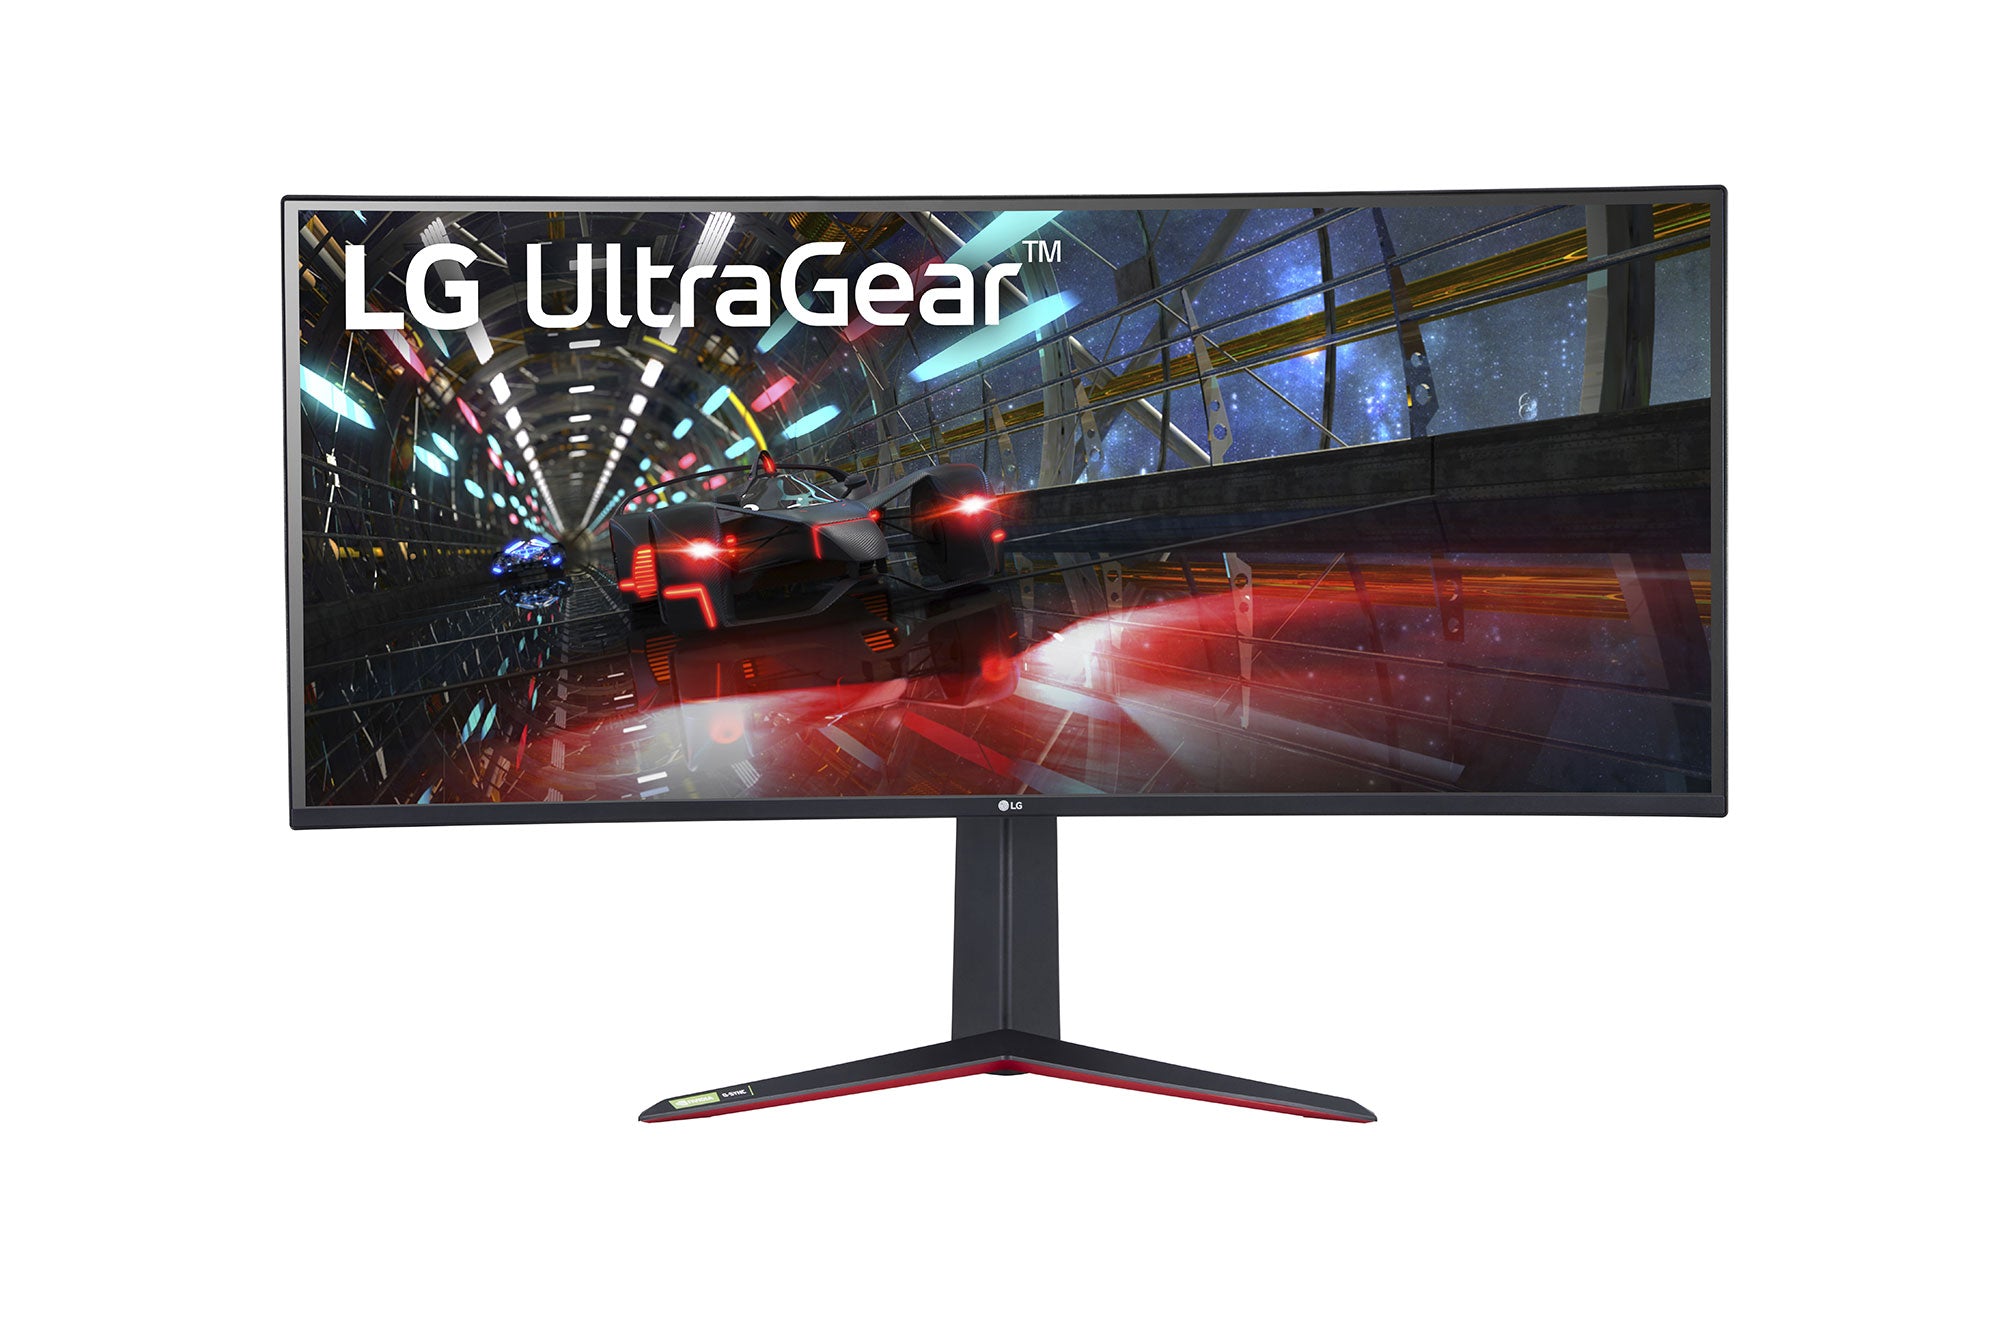 LG 38GN950 UltraGear Monitor / 38 inch / 3840 x 1600 Resolution / AMD FreeSync Premium Pro / Dynamic Action Sync / Black Stabilizer / Nano IPS™ Technology